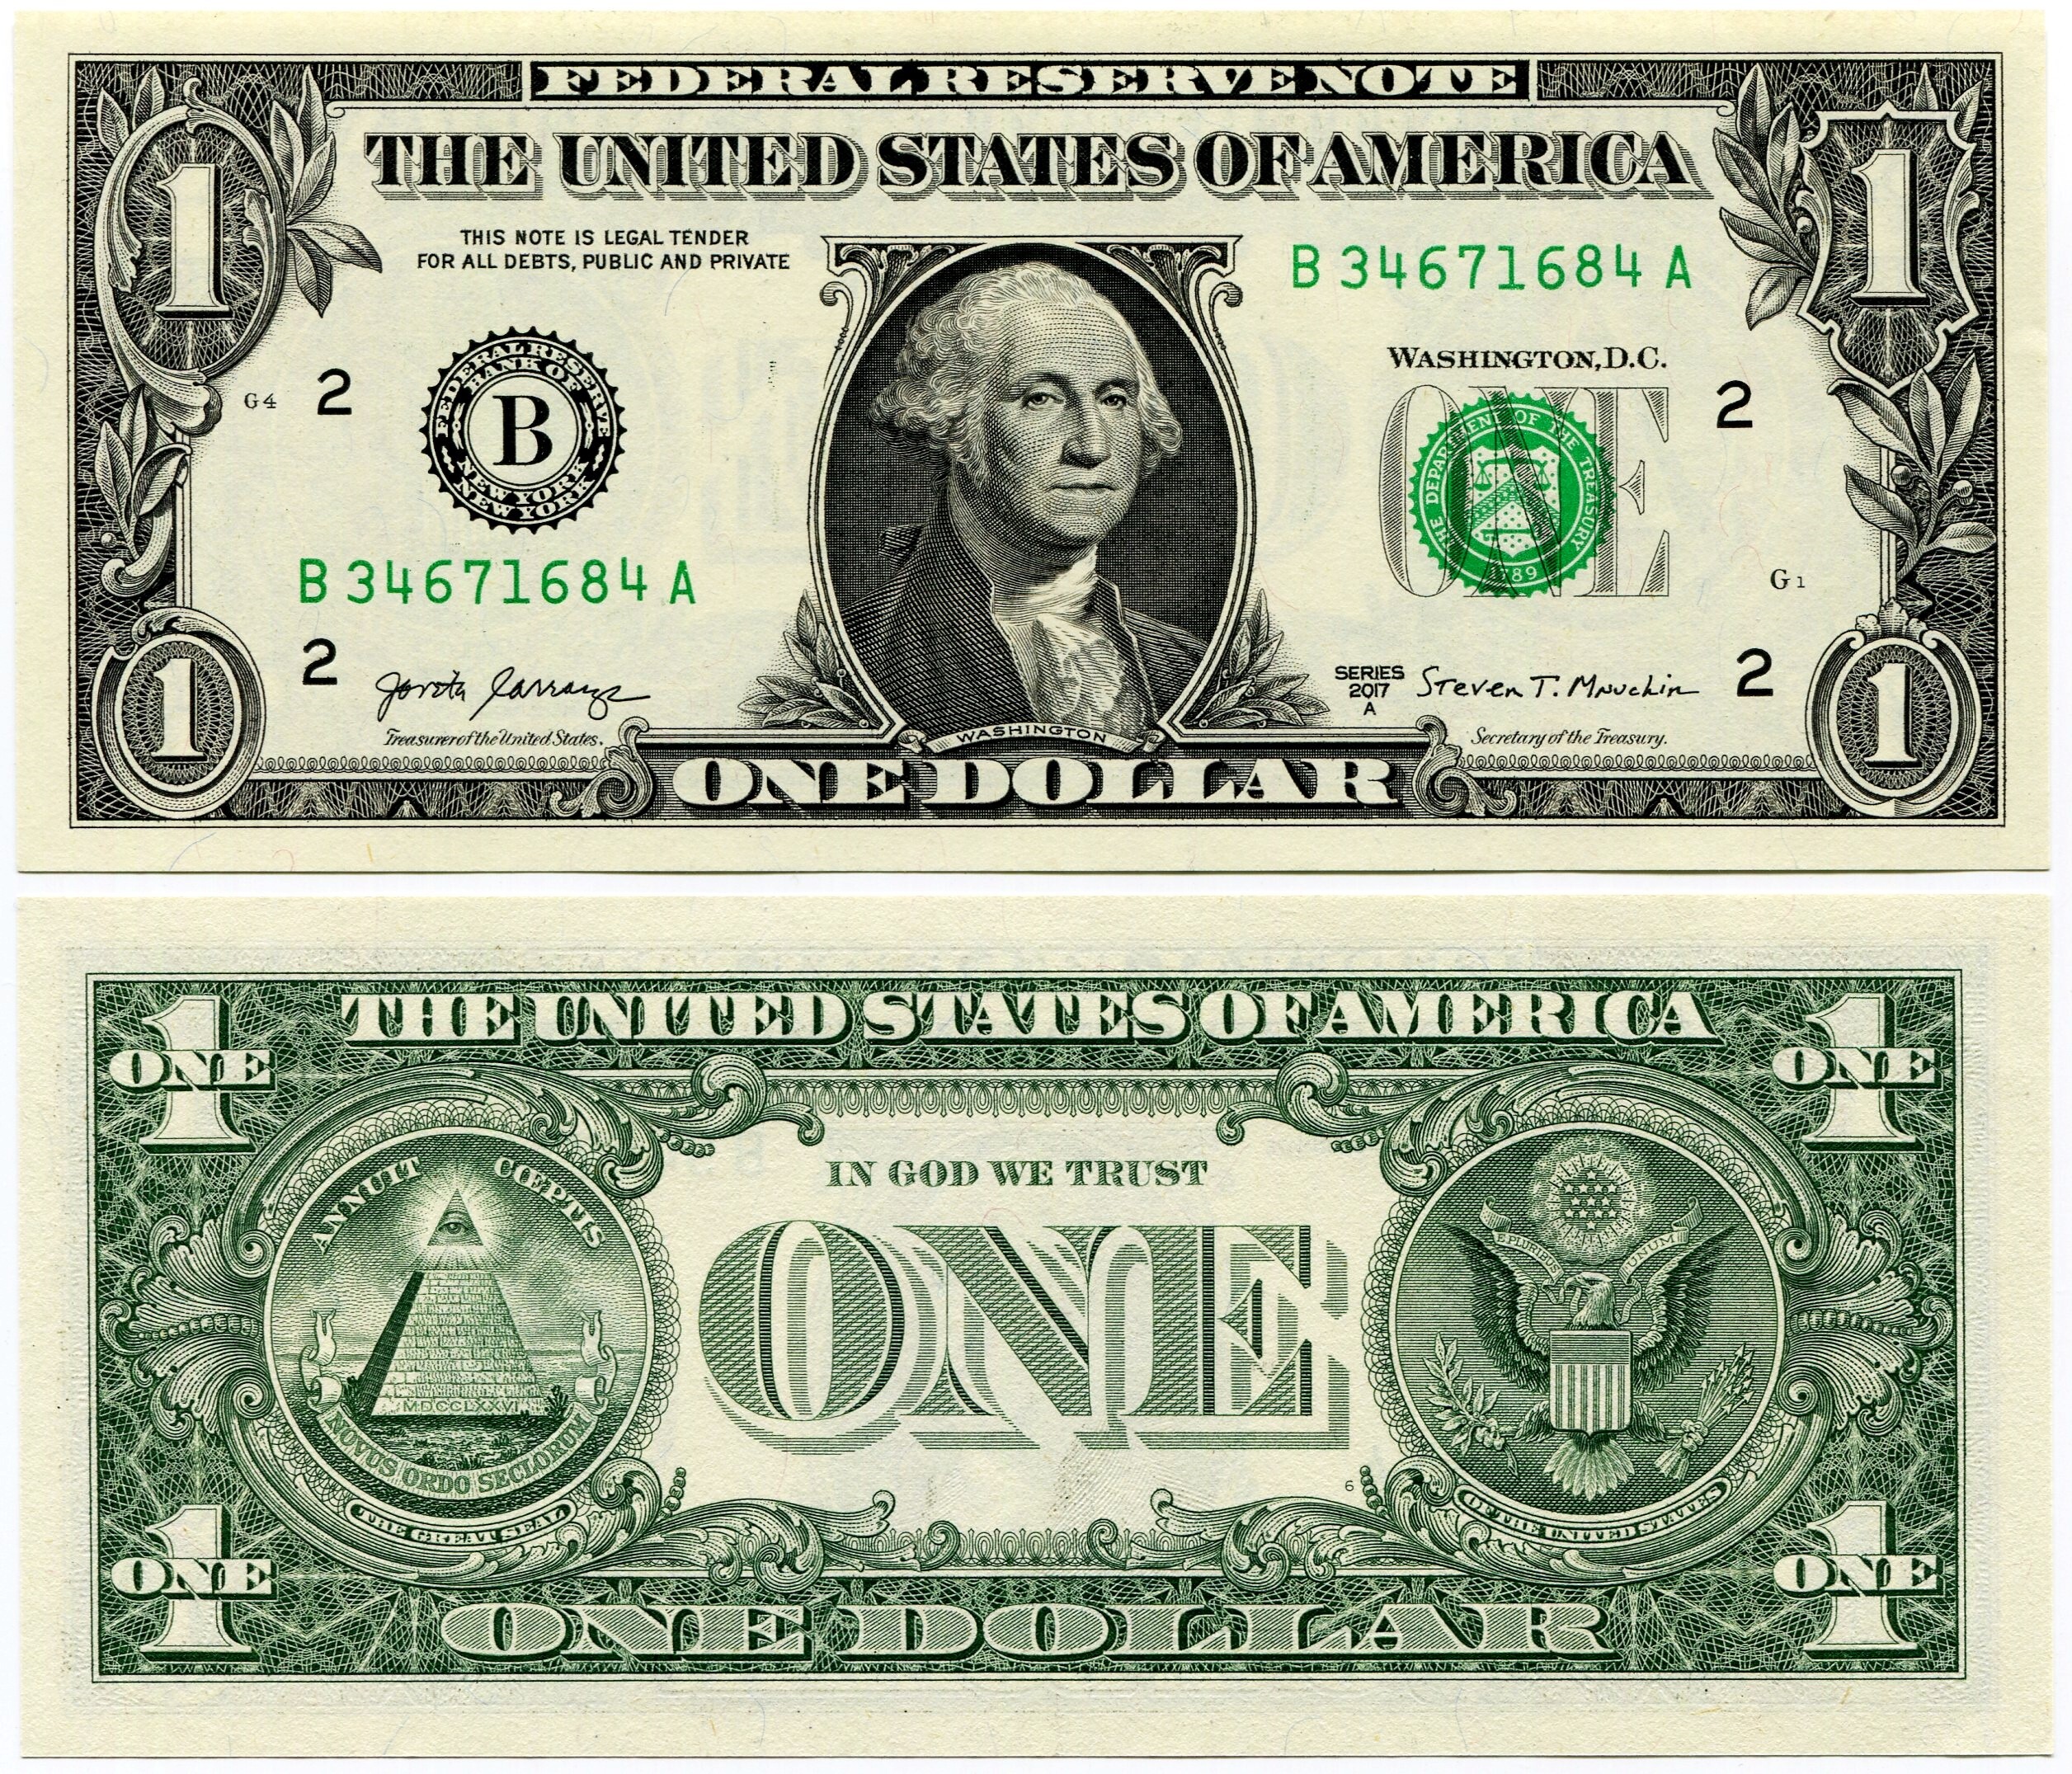 Доллар америке цена. 1 Доллар США. 1 Долларовая купюра. Купюра один доллар США. Однодолларовая купюра США.